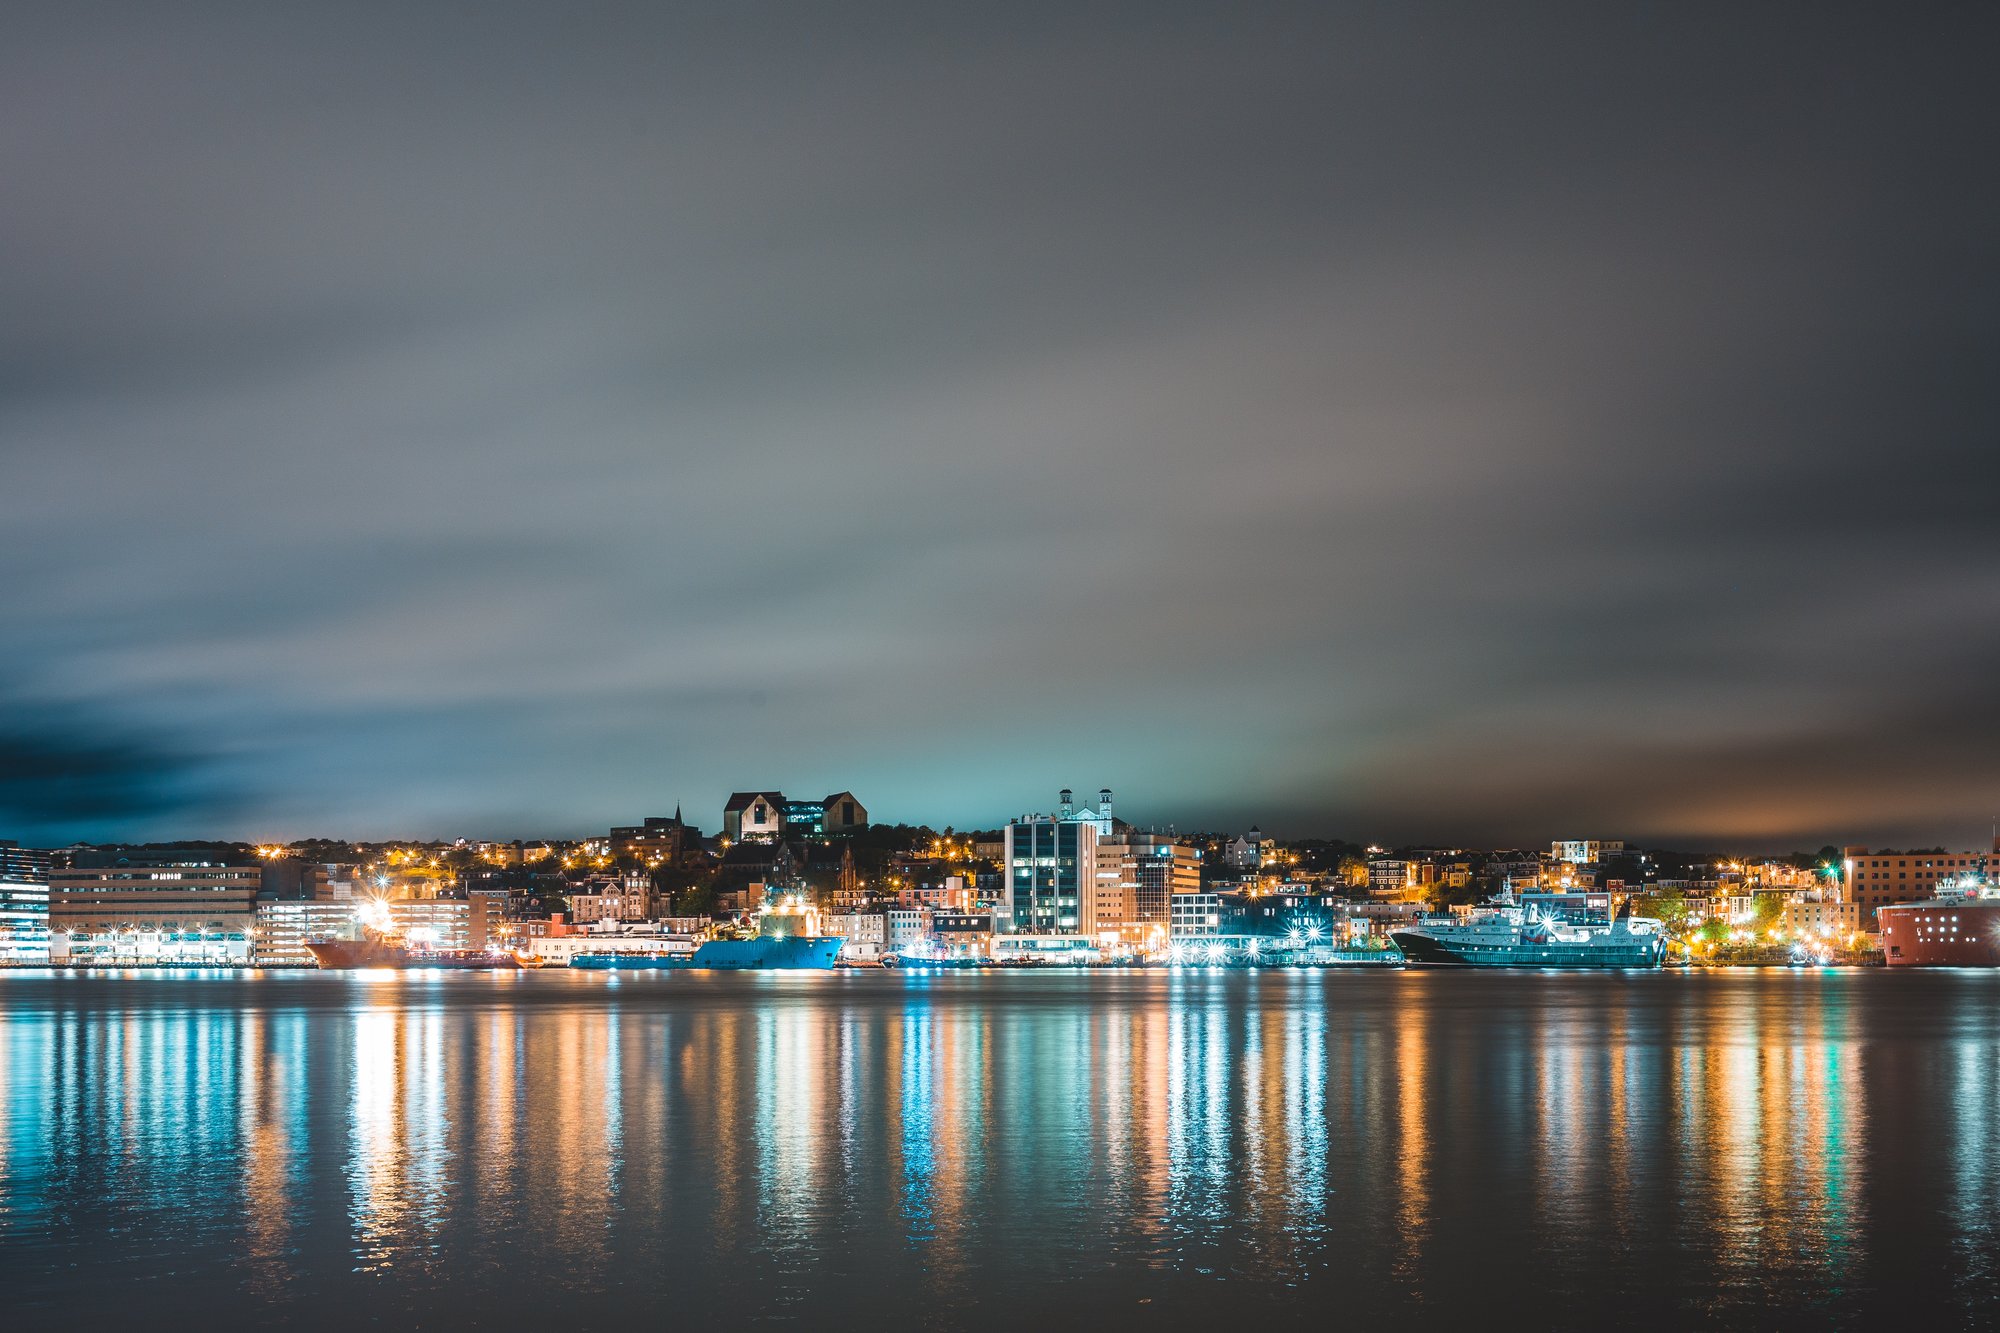 Photo by Erik Mclean: https://www.pexels.com/photo/cloudy-night-sky-over-illuminated-coastal-city-and-harbor-4593510/